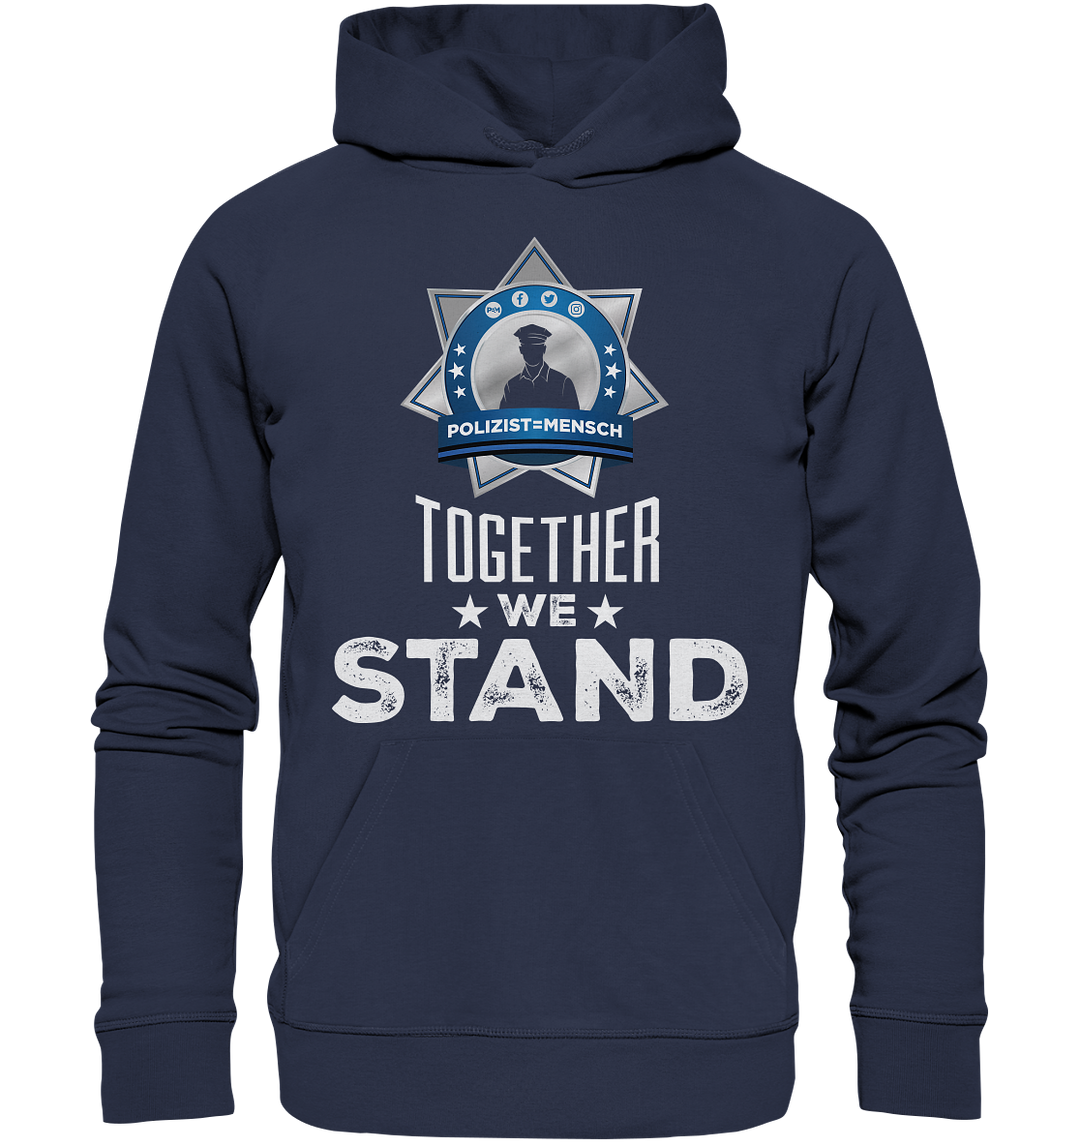 "Together We Stand" - Premium Unisex Hoodie